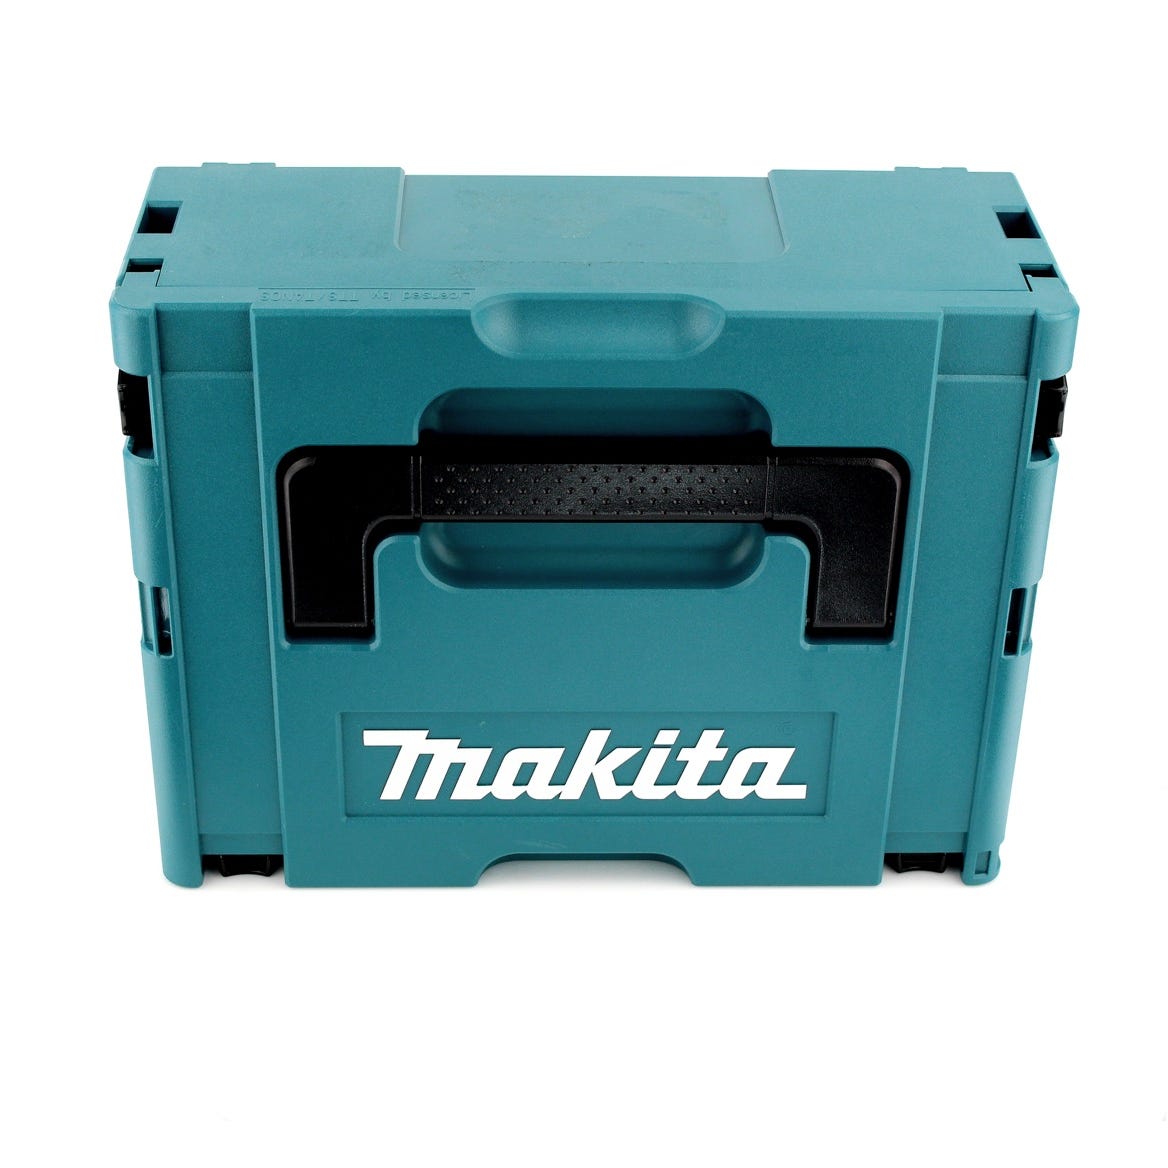 Makita DJR188RFJ Scie récipro sans fil Brushless 18V + 2x Batteries 3,0Ah + Chargeur + Coffret Makpac 3